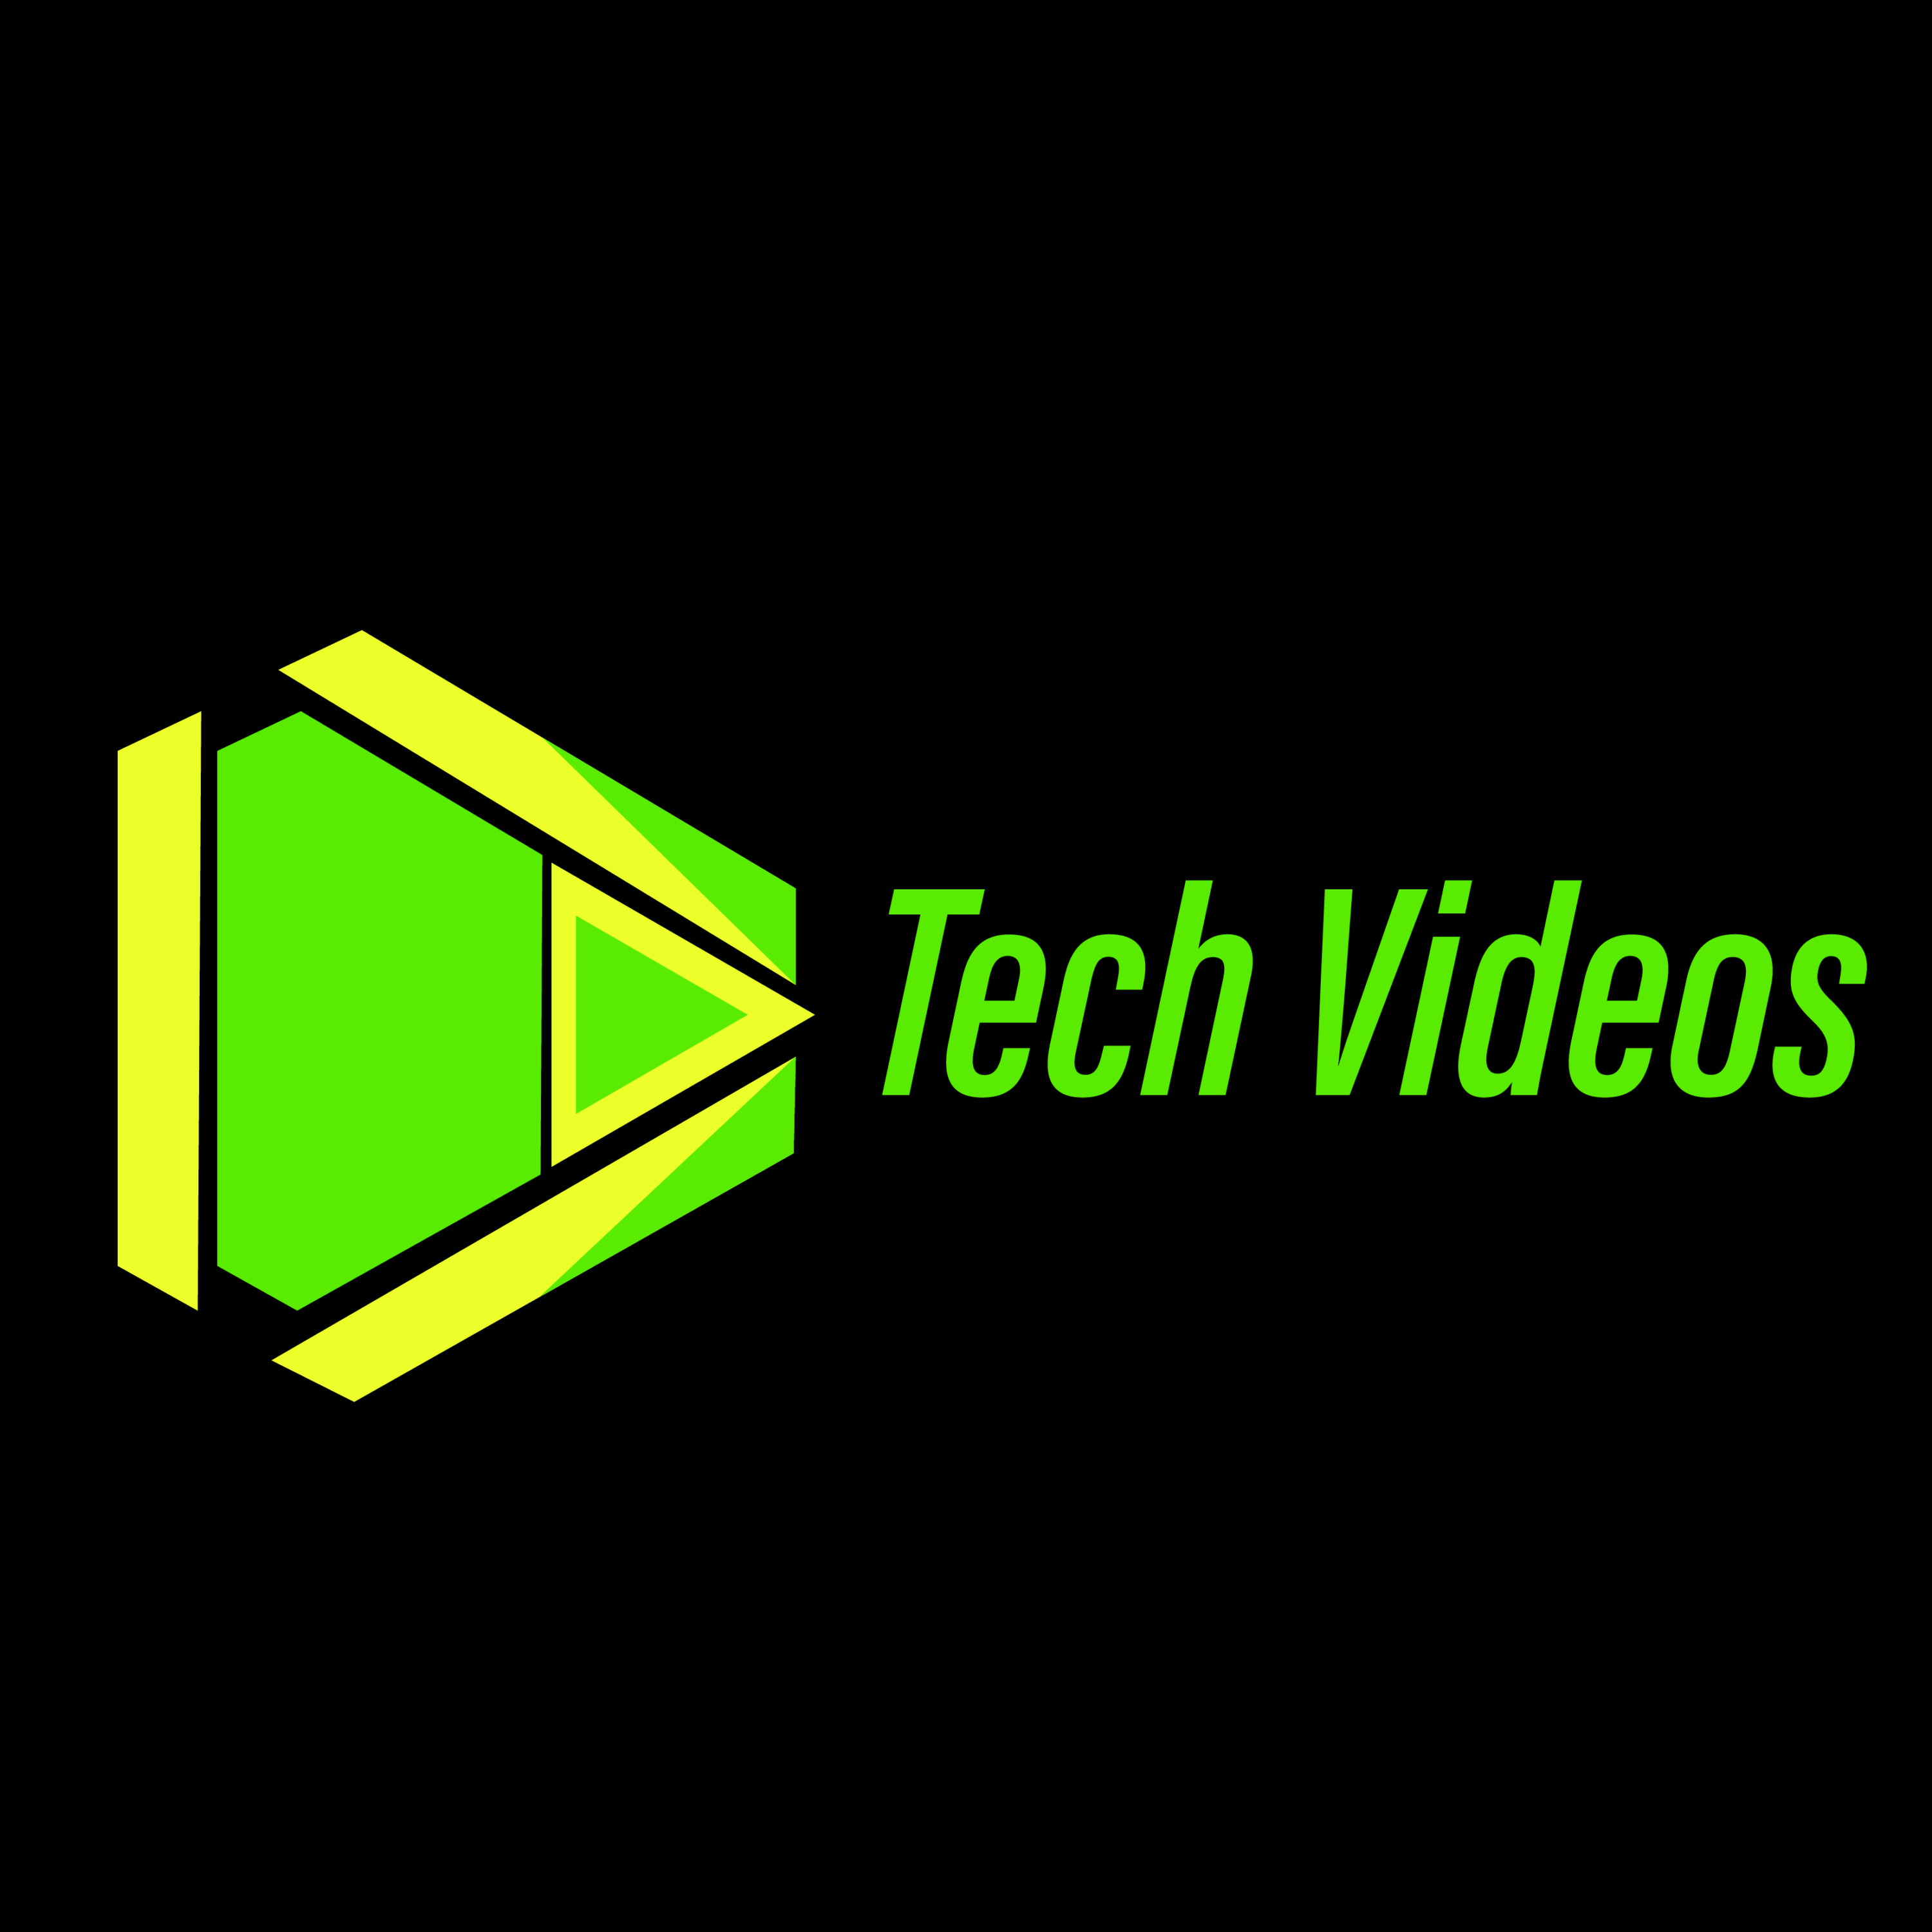 Video Icon Logo, green logo on dark background.